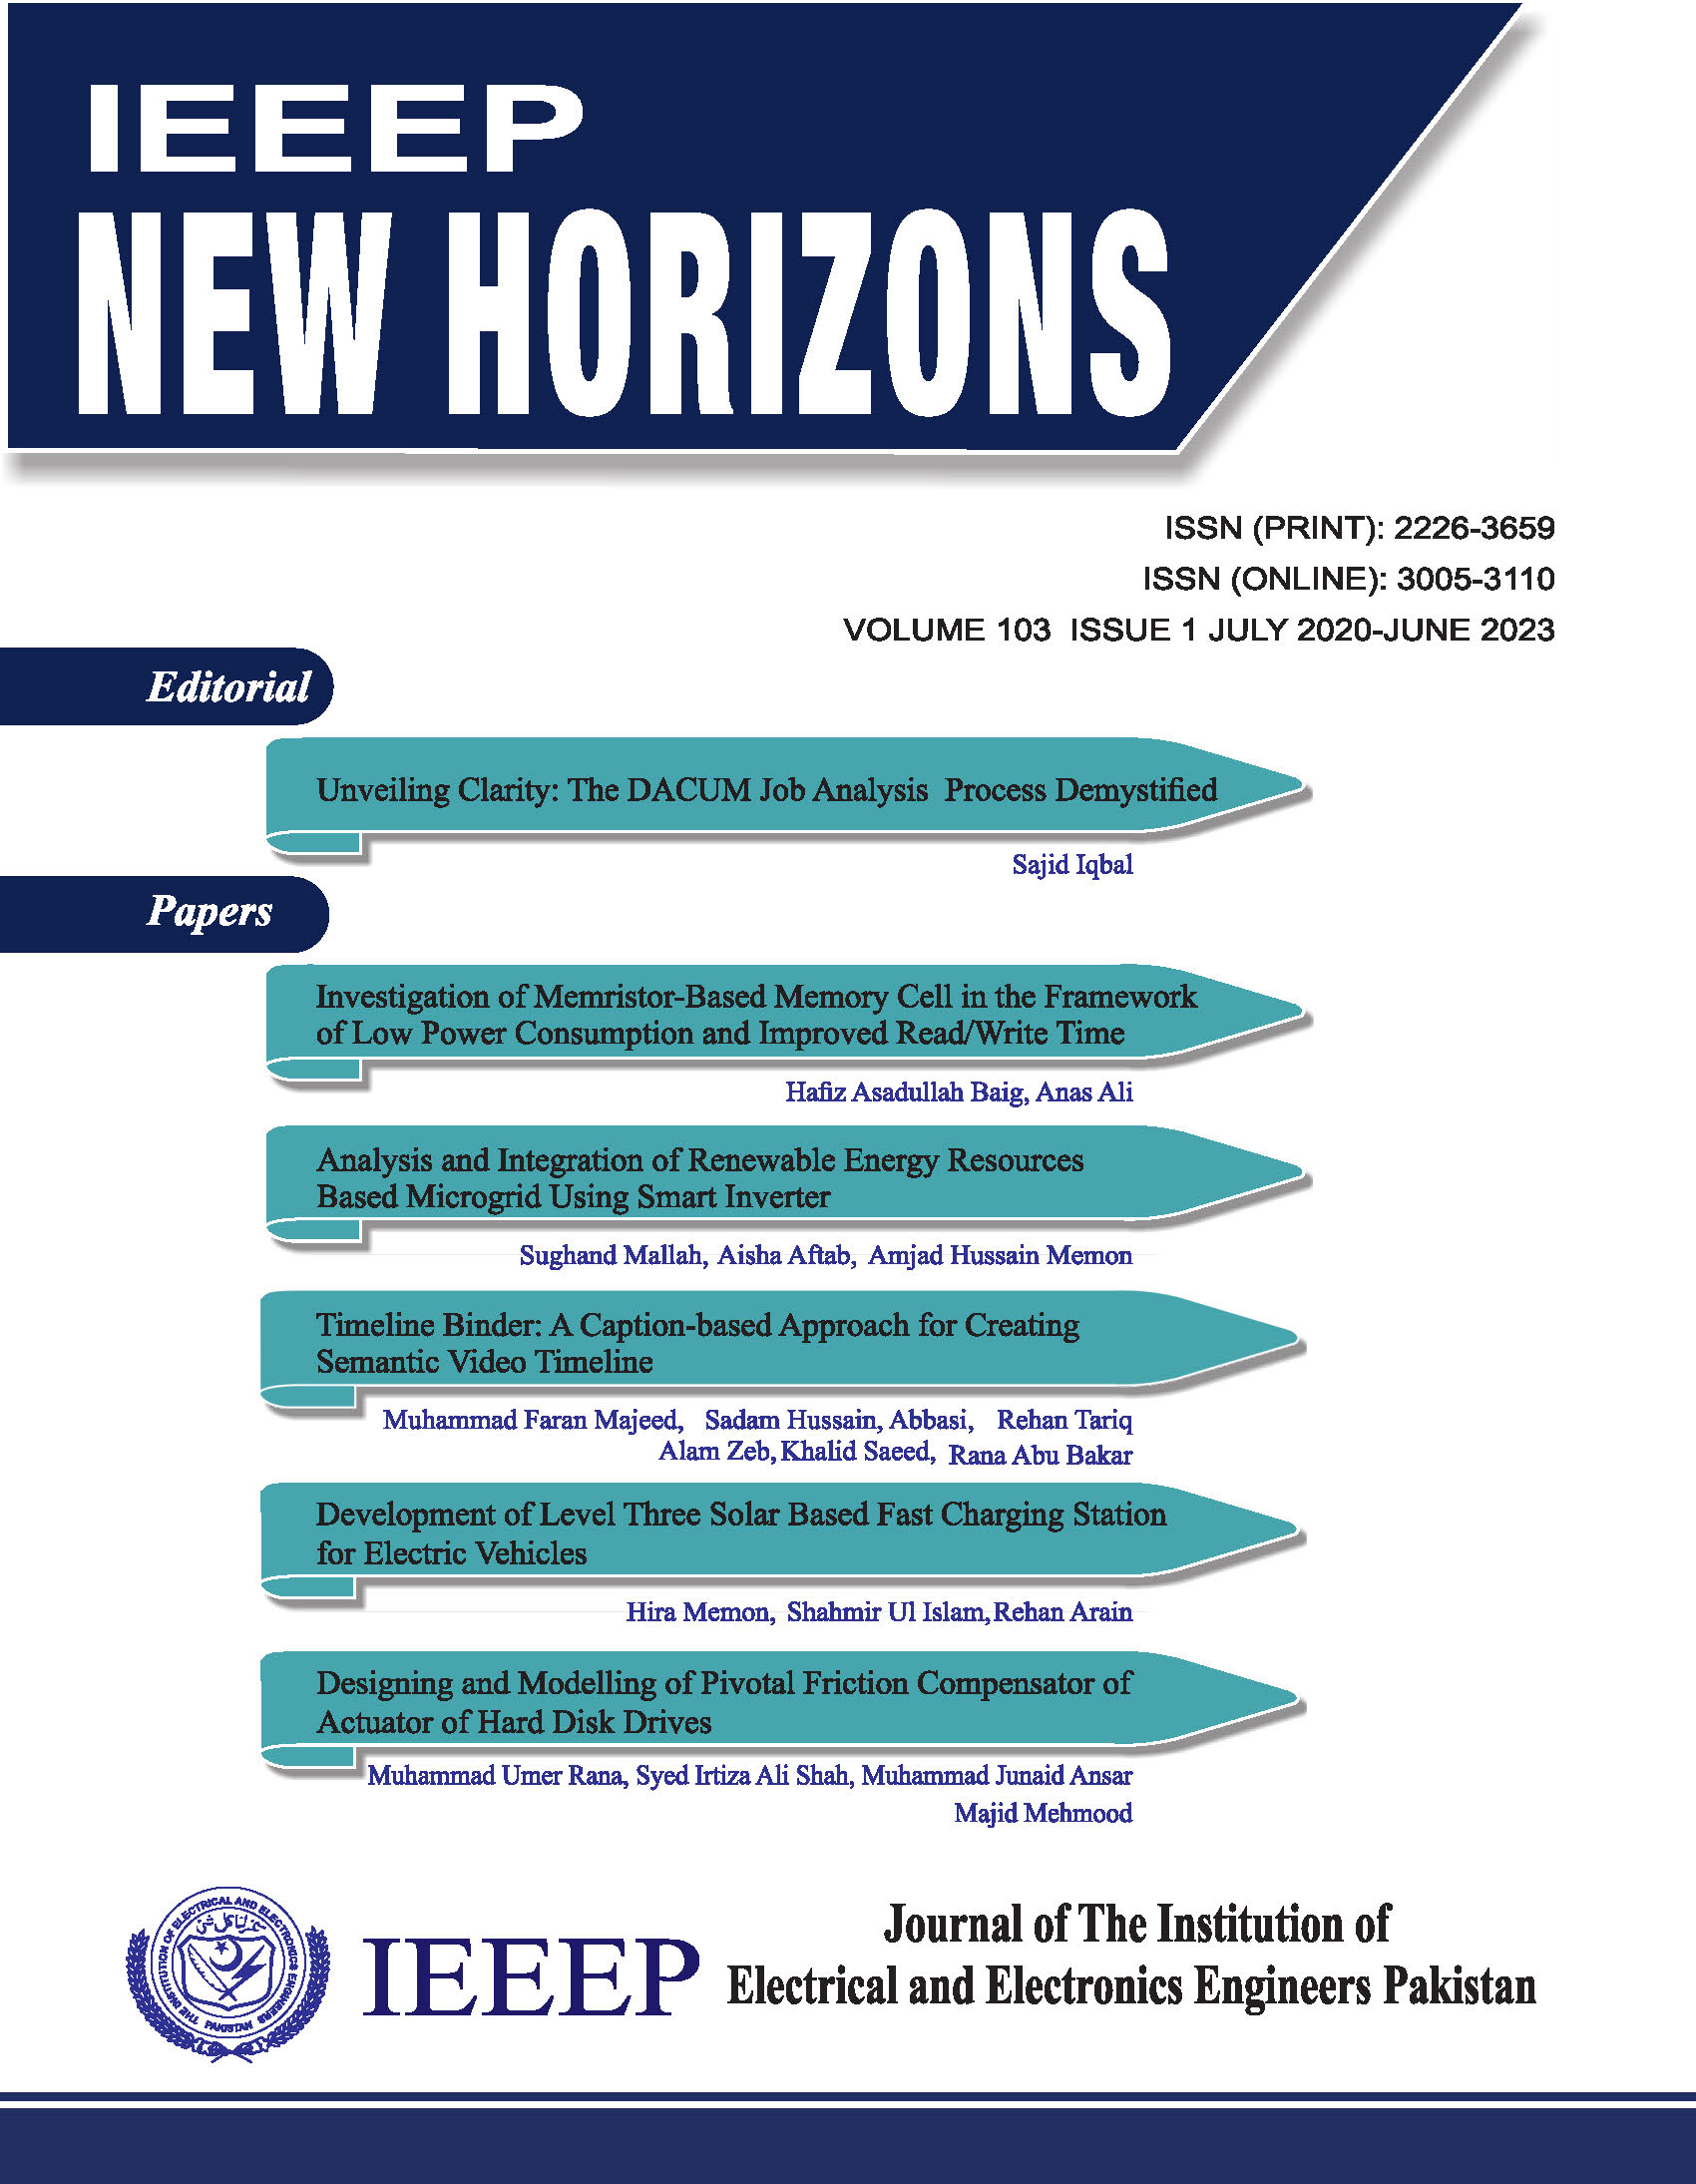 IEEEP New Horizons Journal Vol. 103 issue1